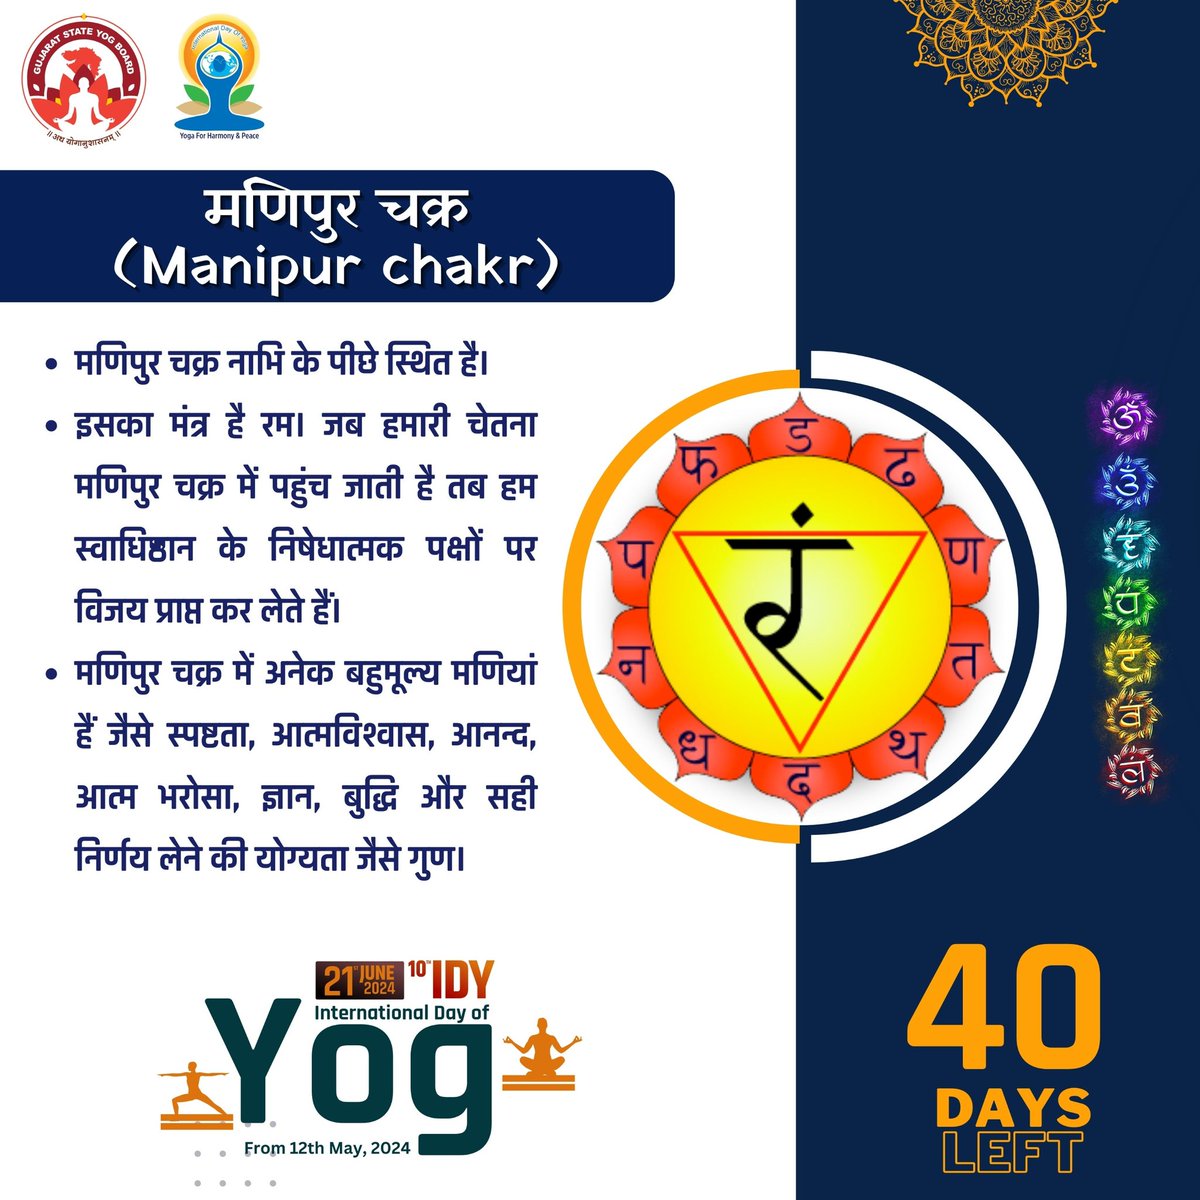 40 Days left to International Day of Yoga 2024

#GujaratStateYogBoard #YogmayGujarat #yogkaamrutkal #IDY2024